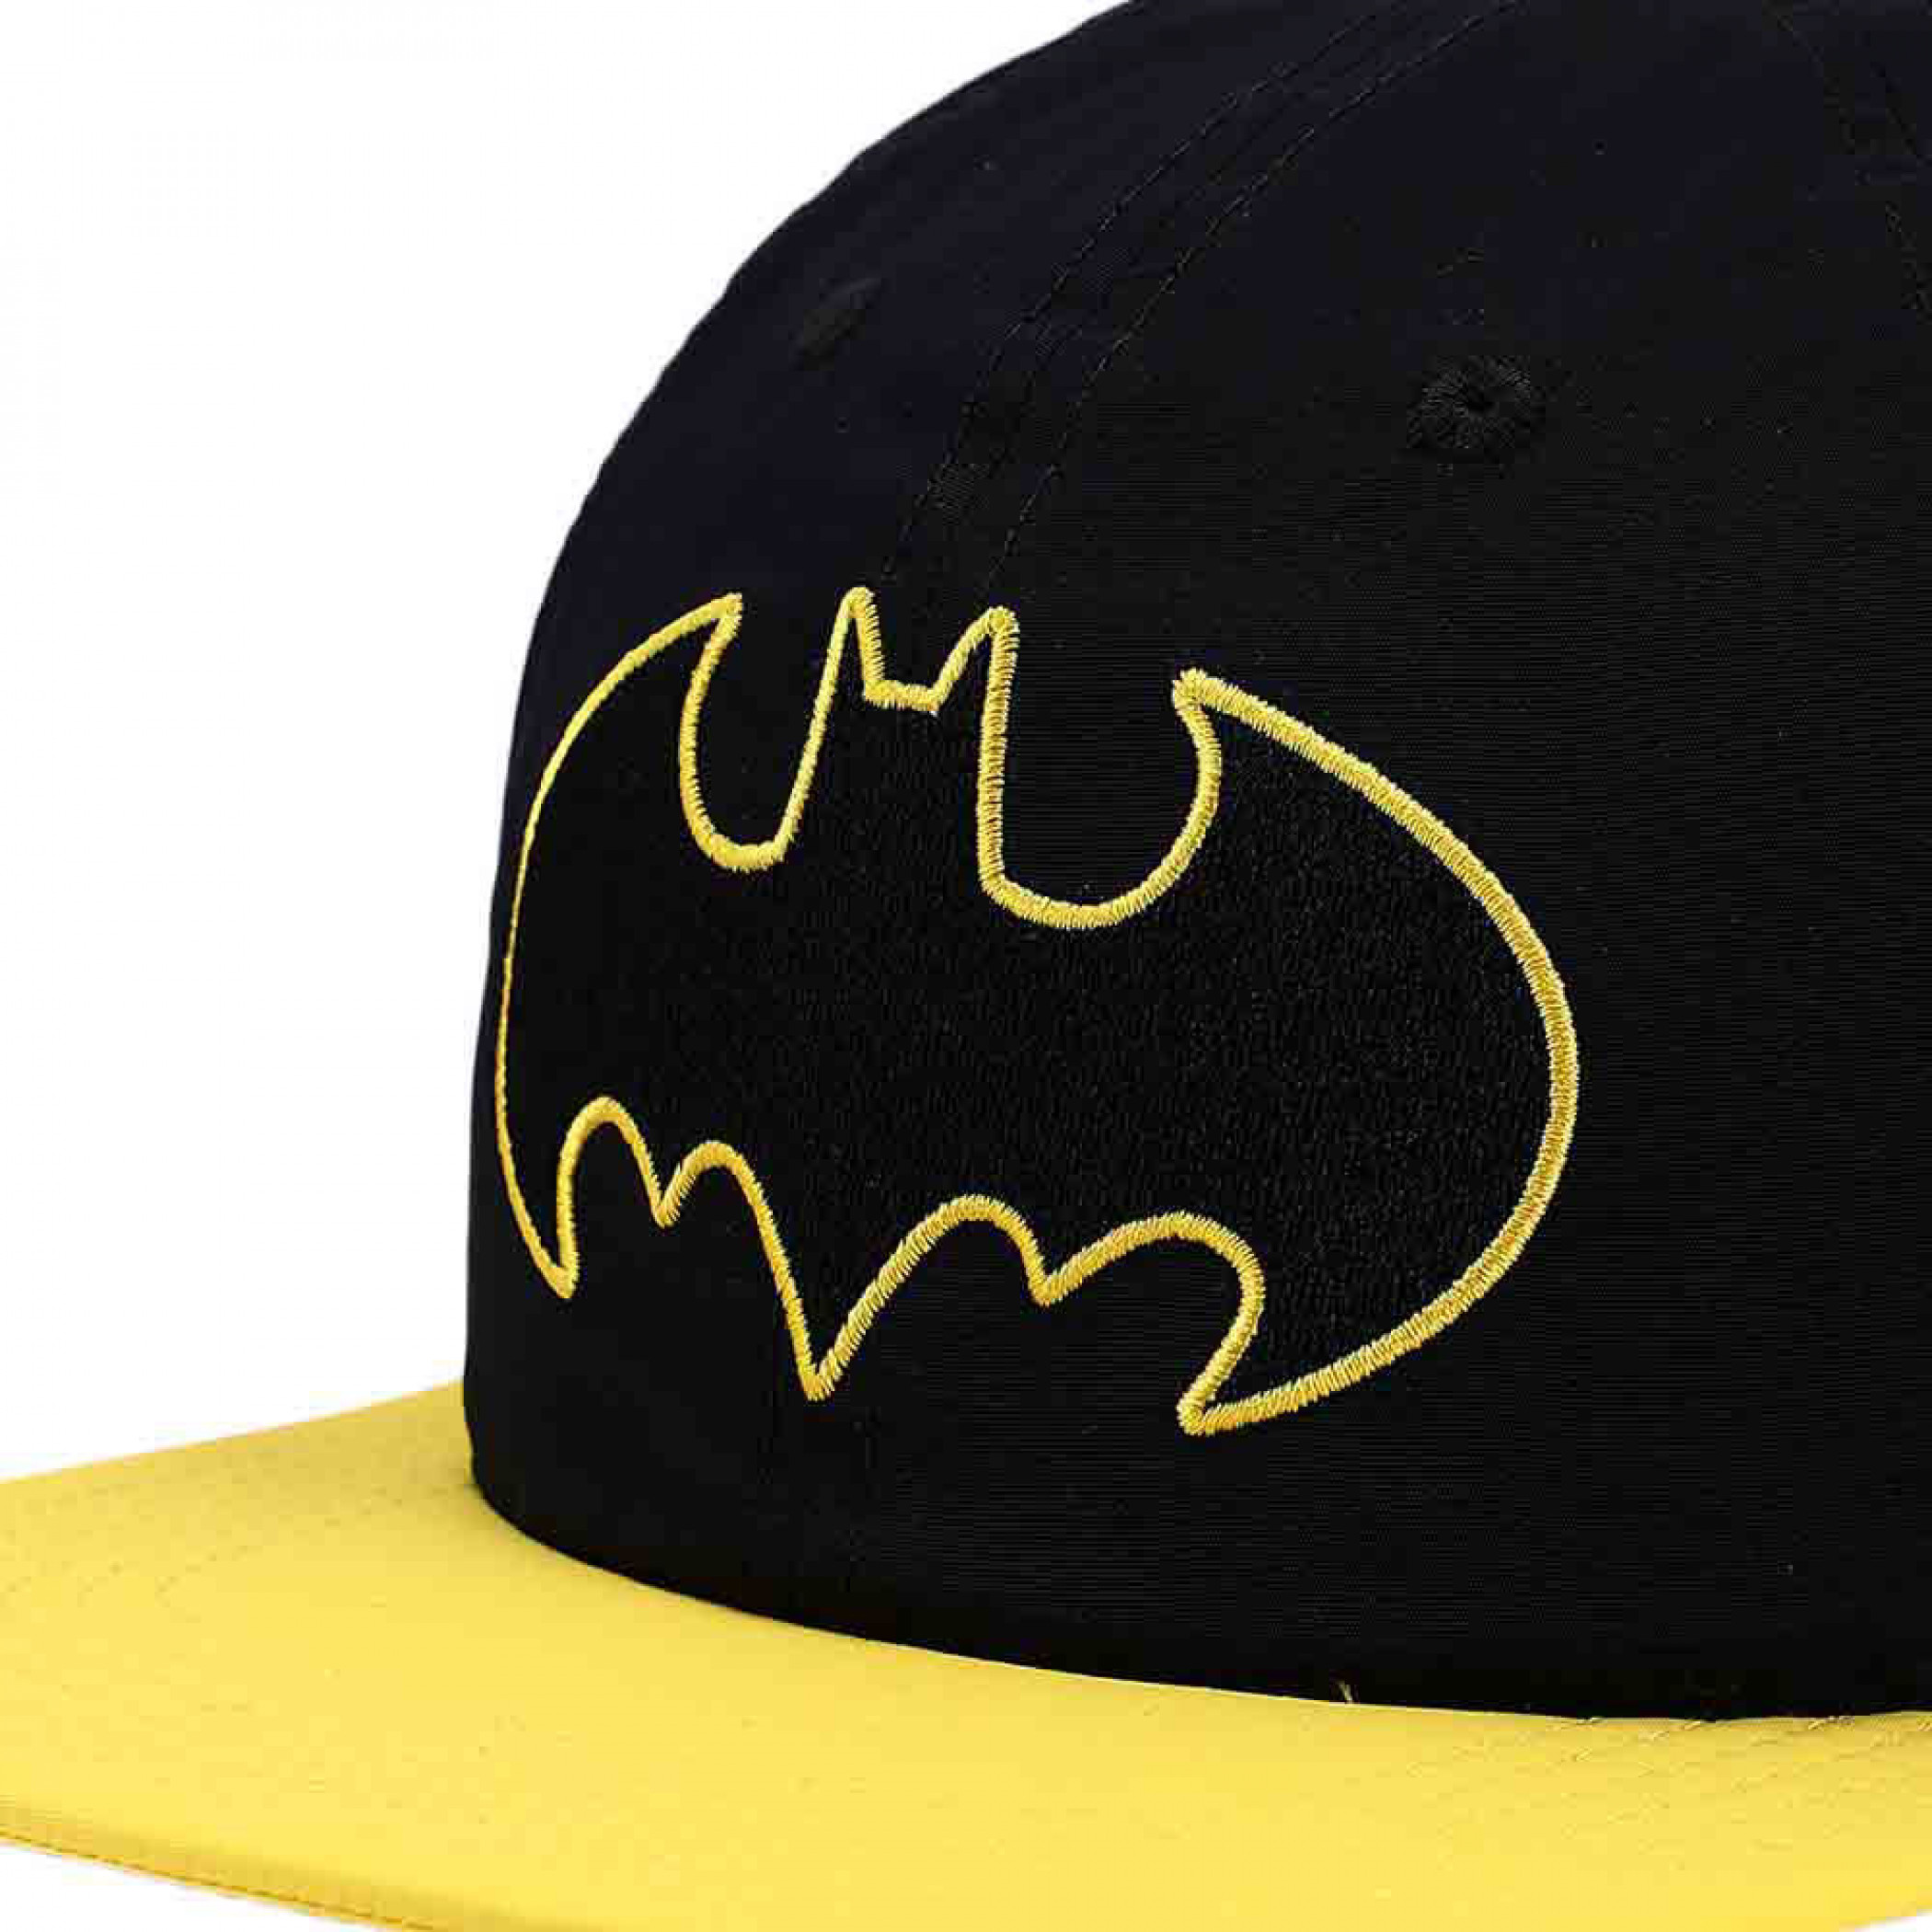 DC Comics Batman Classic Embroidered Logo Flat Bill Snapback Hat